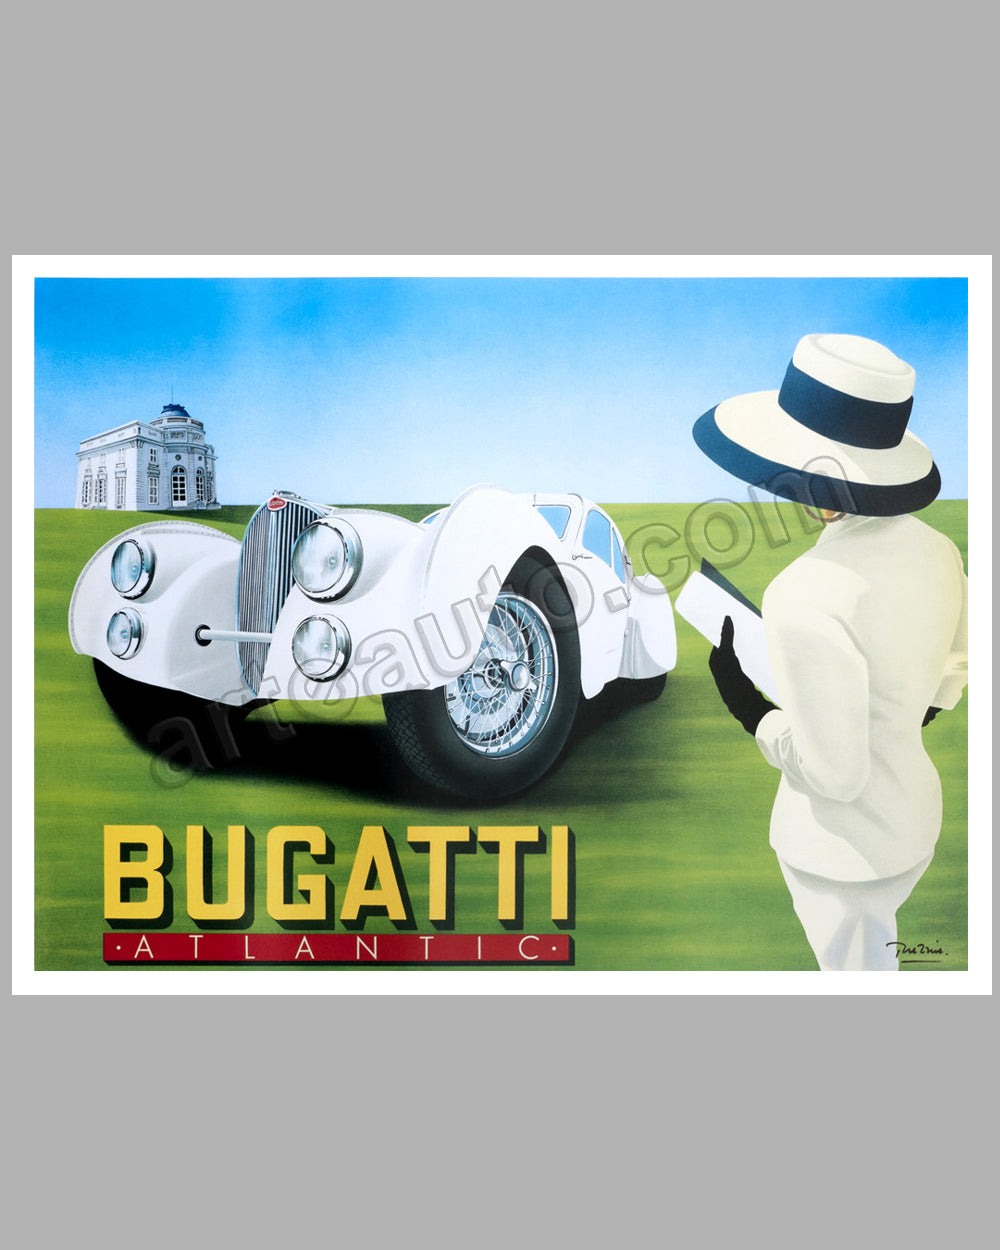 Bugatti Atlantic large poster by Razzia